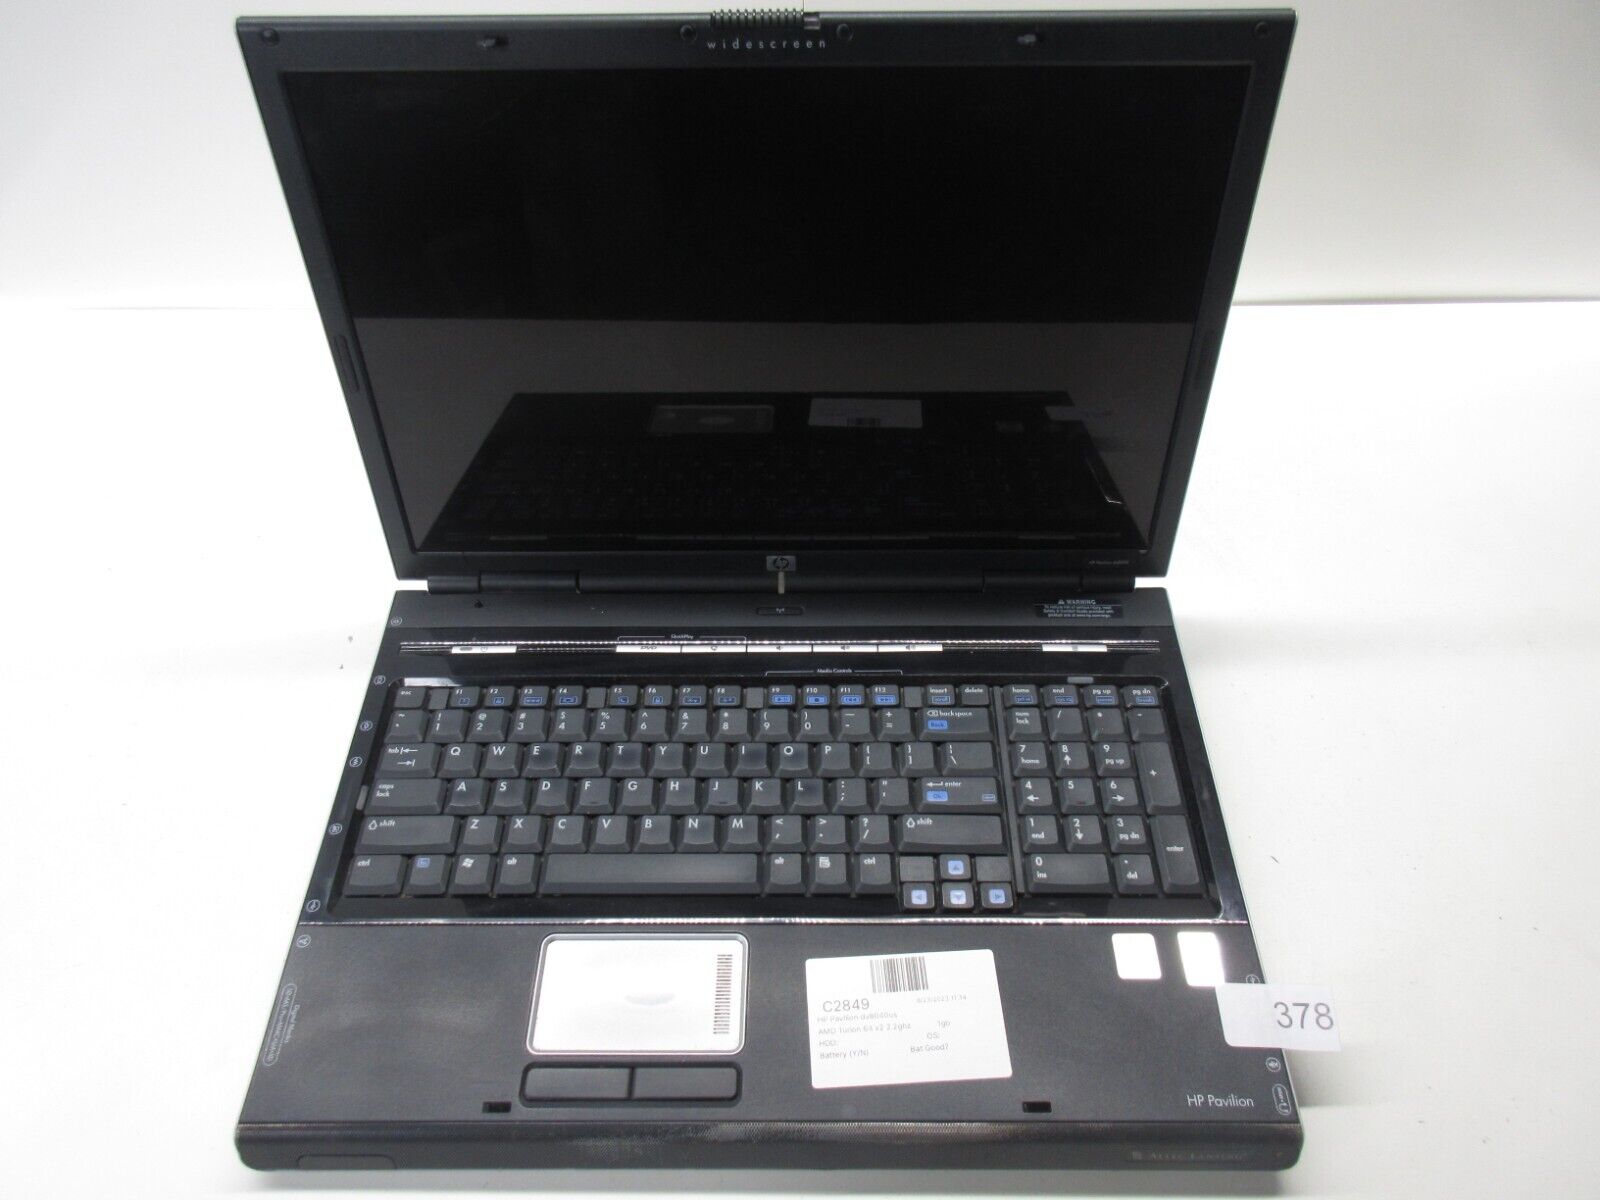 HP Pavilion dv8040us Laptop AMD Turion 64 x2 1GB Ram No HDD or Battery